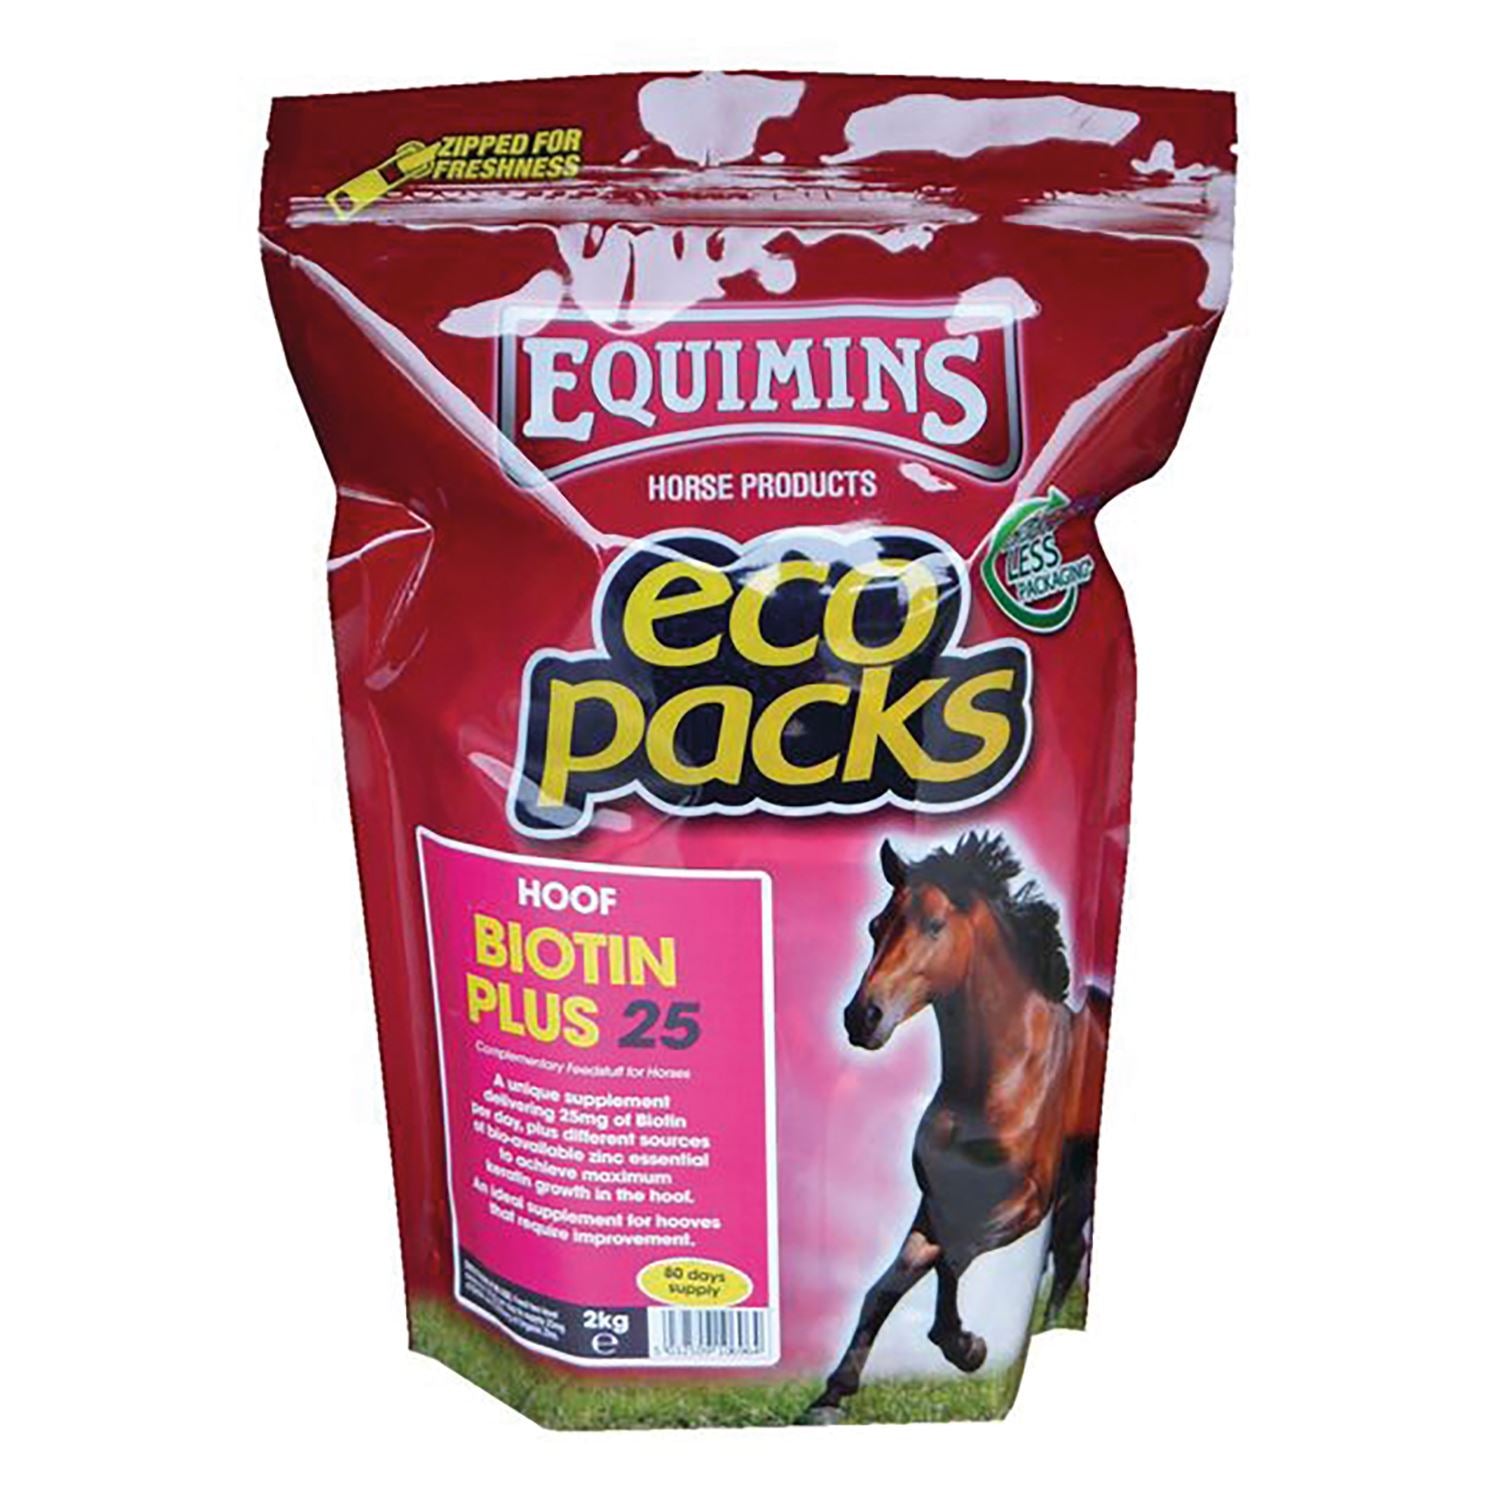 Equimins Biotin Plus 25 - Just Horse Riders